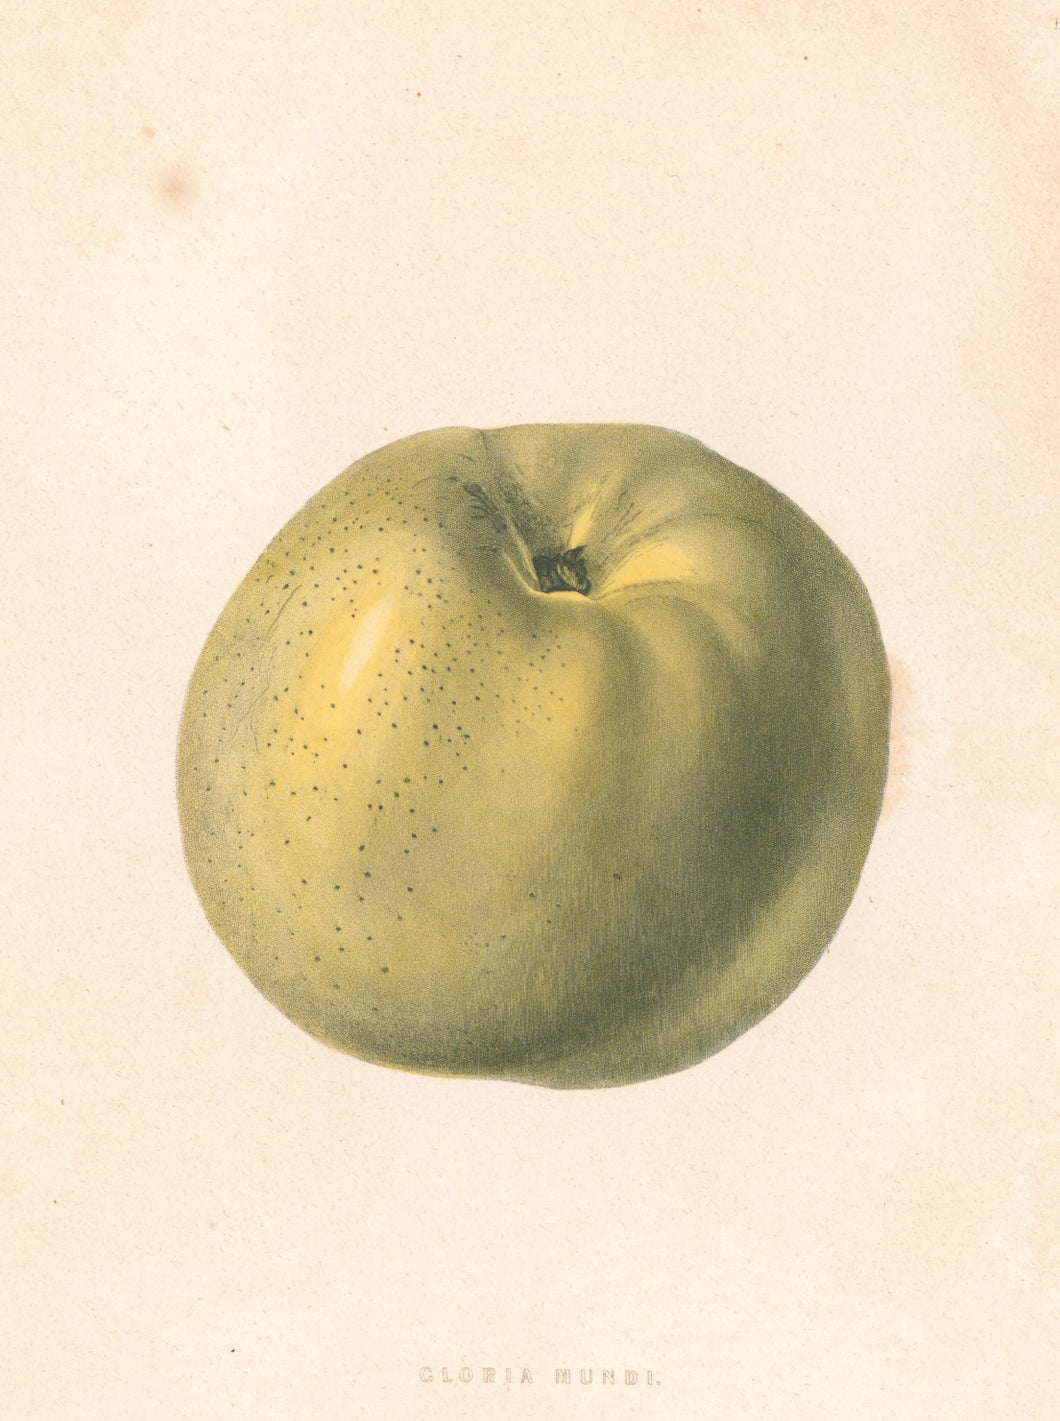 Emmons, Ebenezer “Gloria Mundi”  [apple]  Plate 34